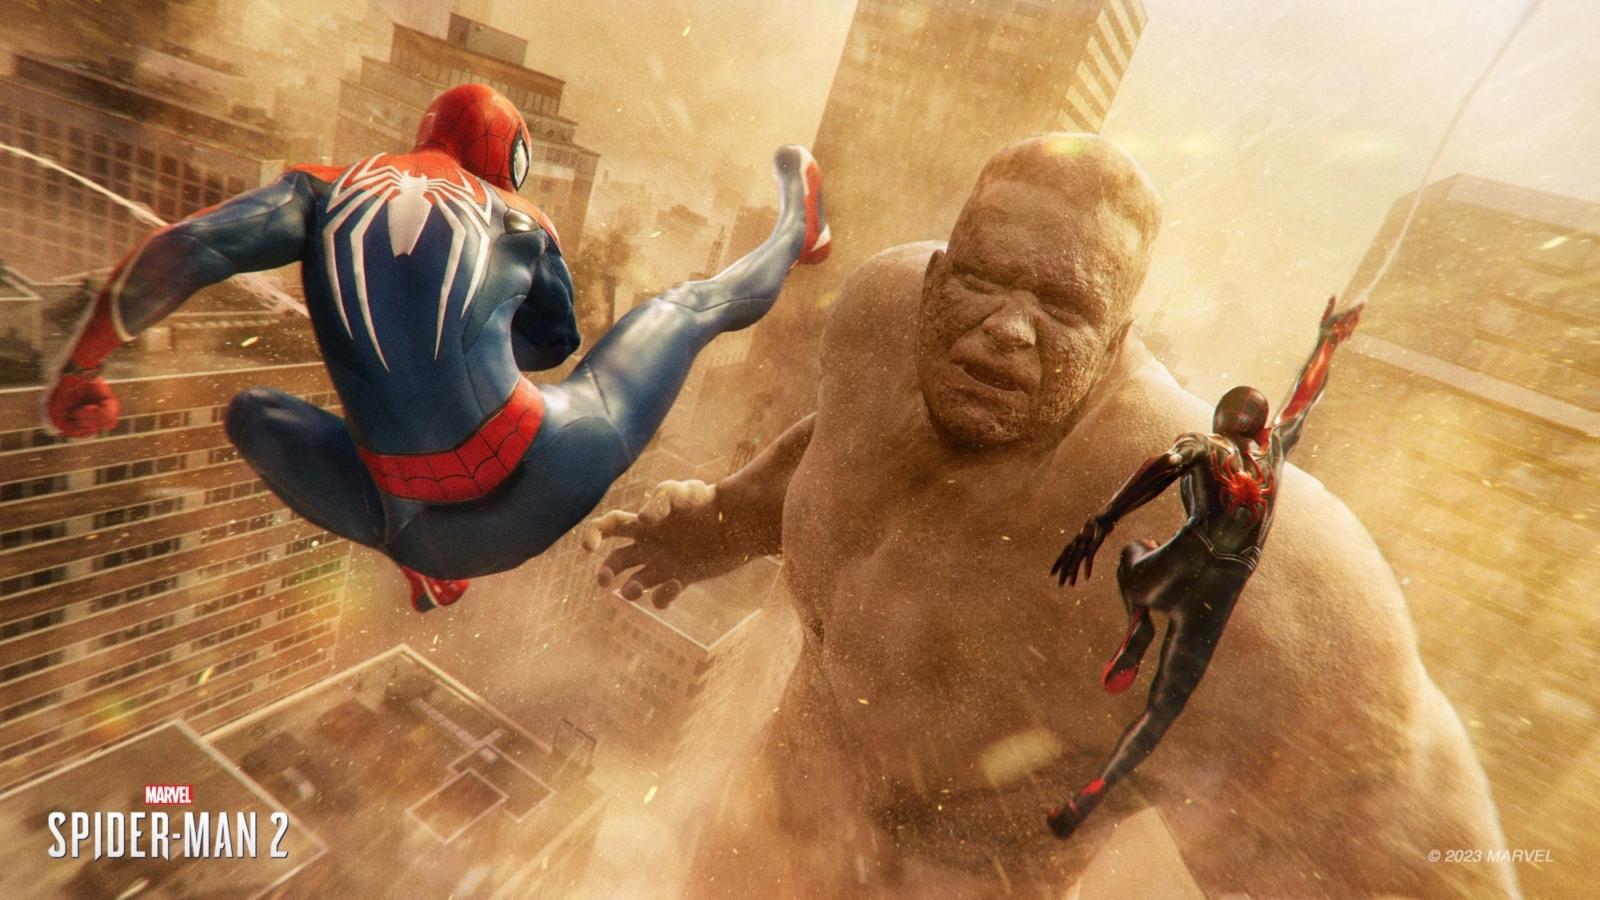 Spider-Man 2 creative director teases third game